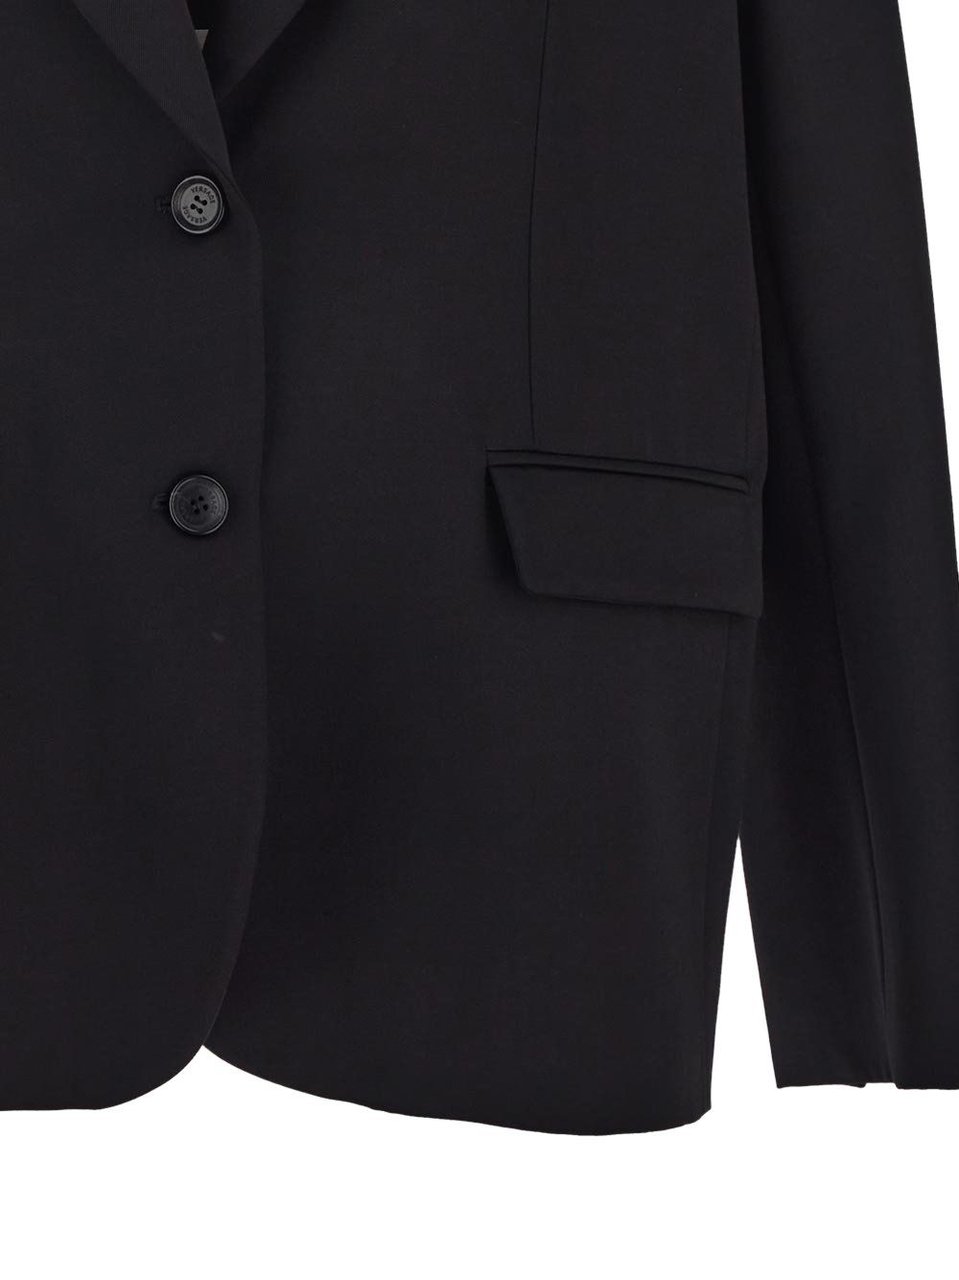 Versace Informal Black Wool Jacket Zwart